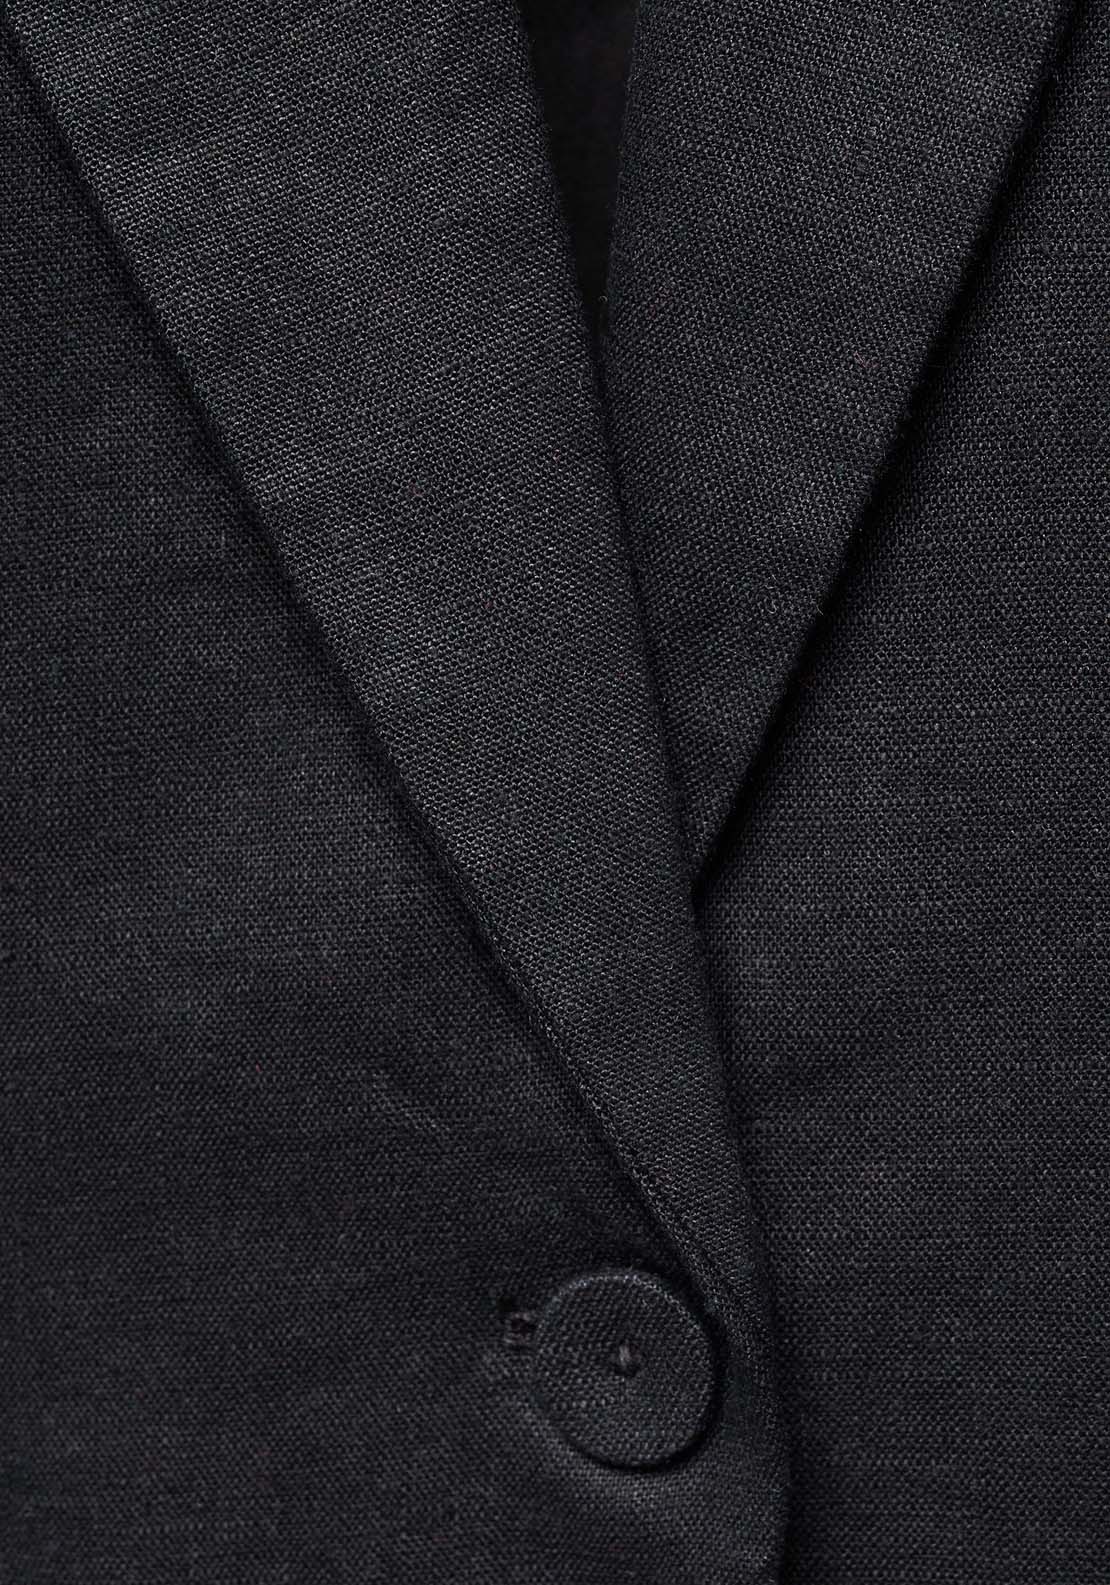 Mango Blazer suit 100% linen - Black 6 Shaws Department Stores